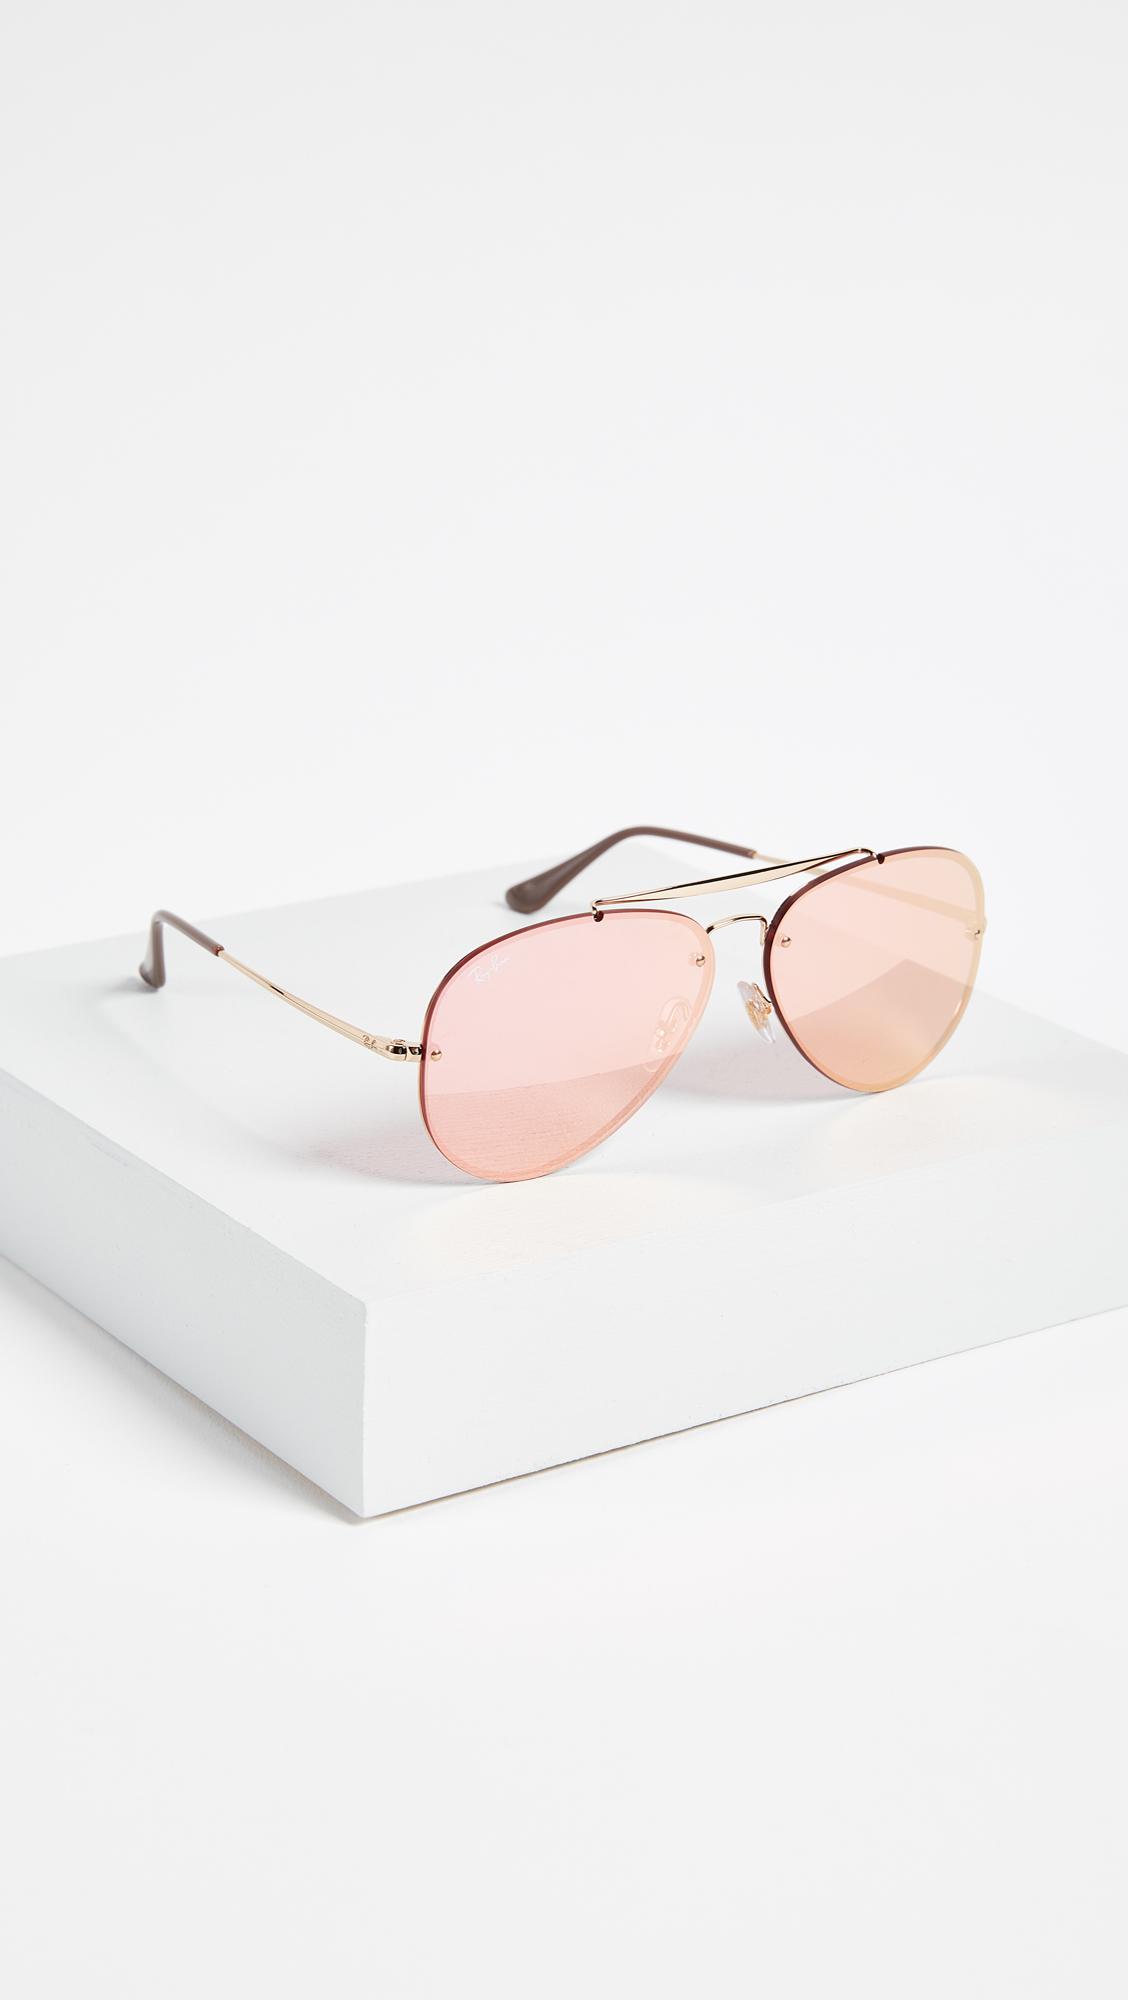 Claire emulsie Veroveren Ray-Ban Blaze Flat Lens Pilot Aviator Sunglasses in Pink | Lyst